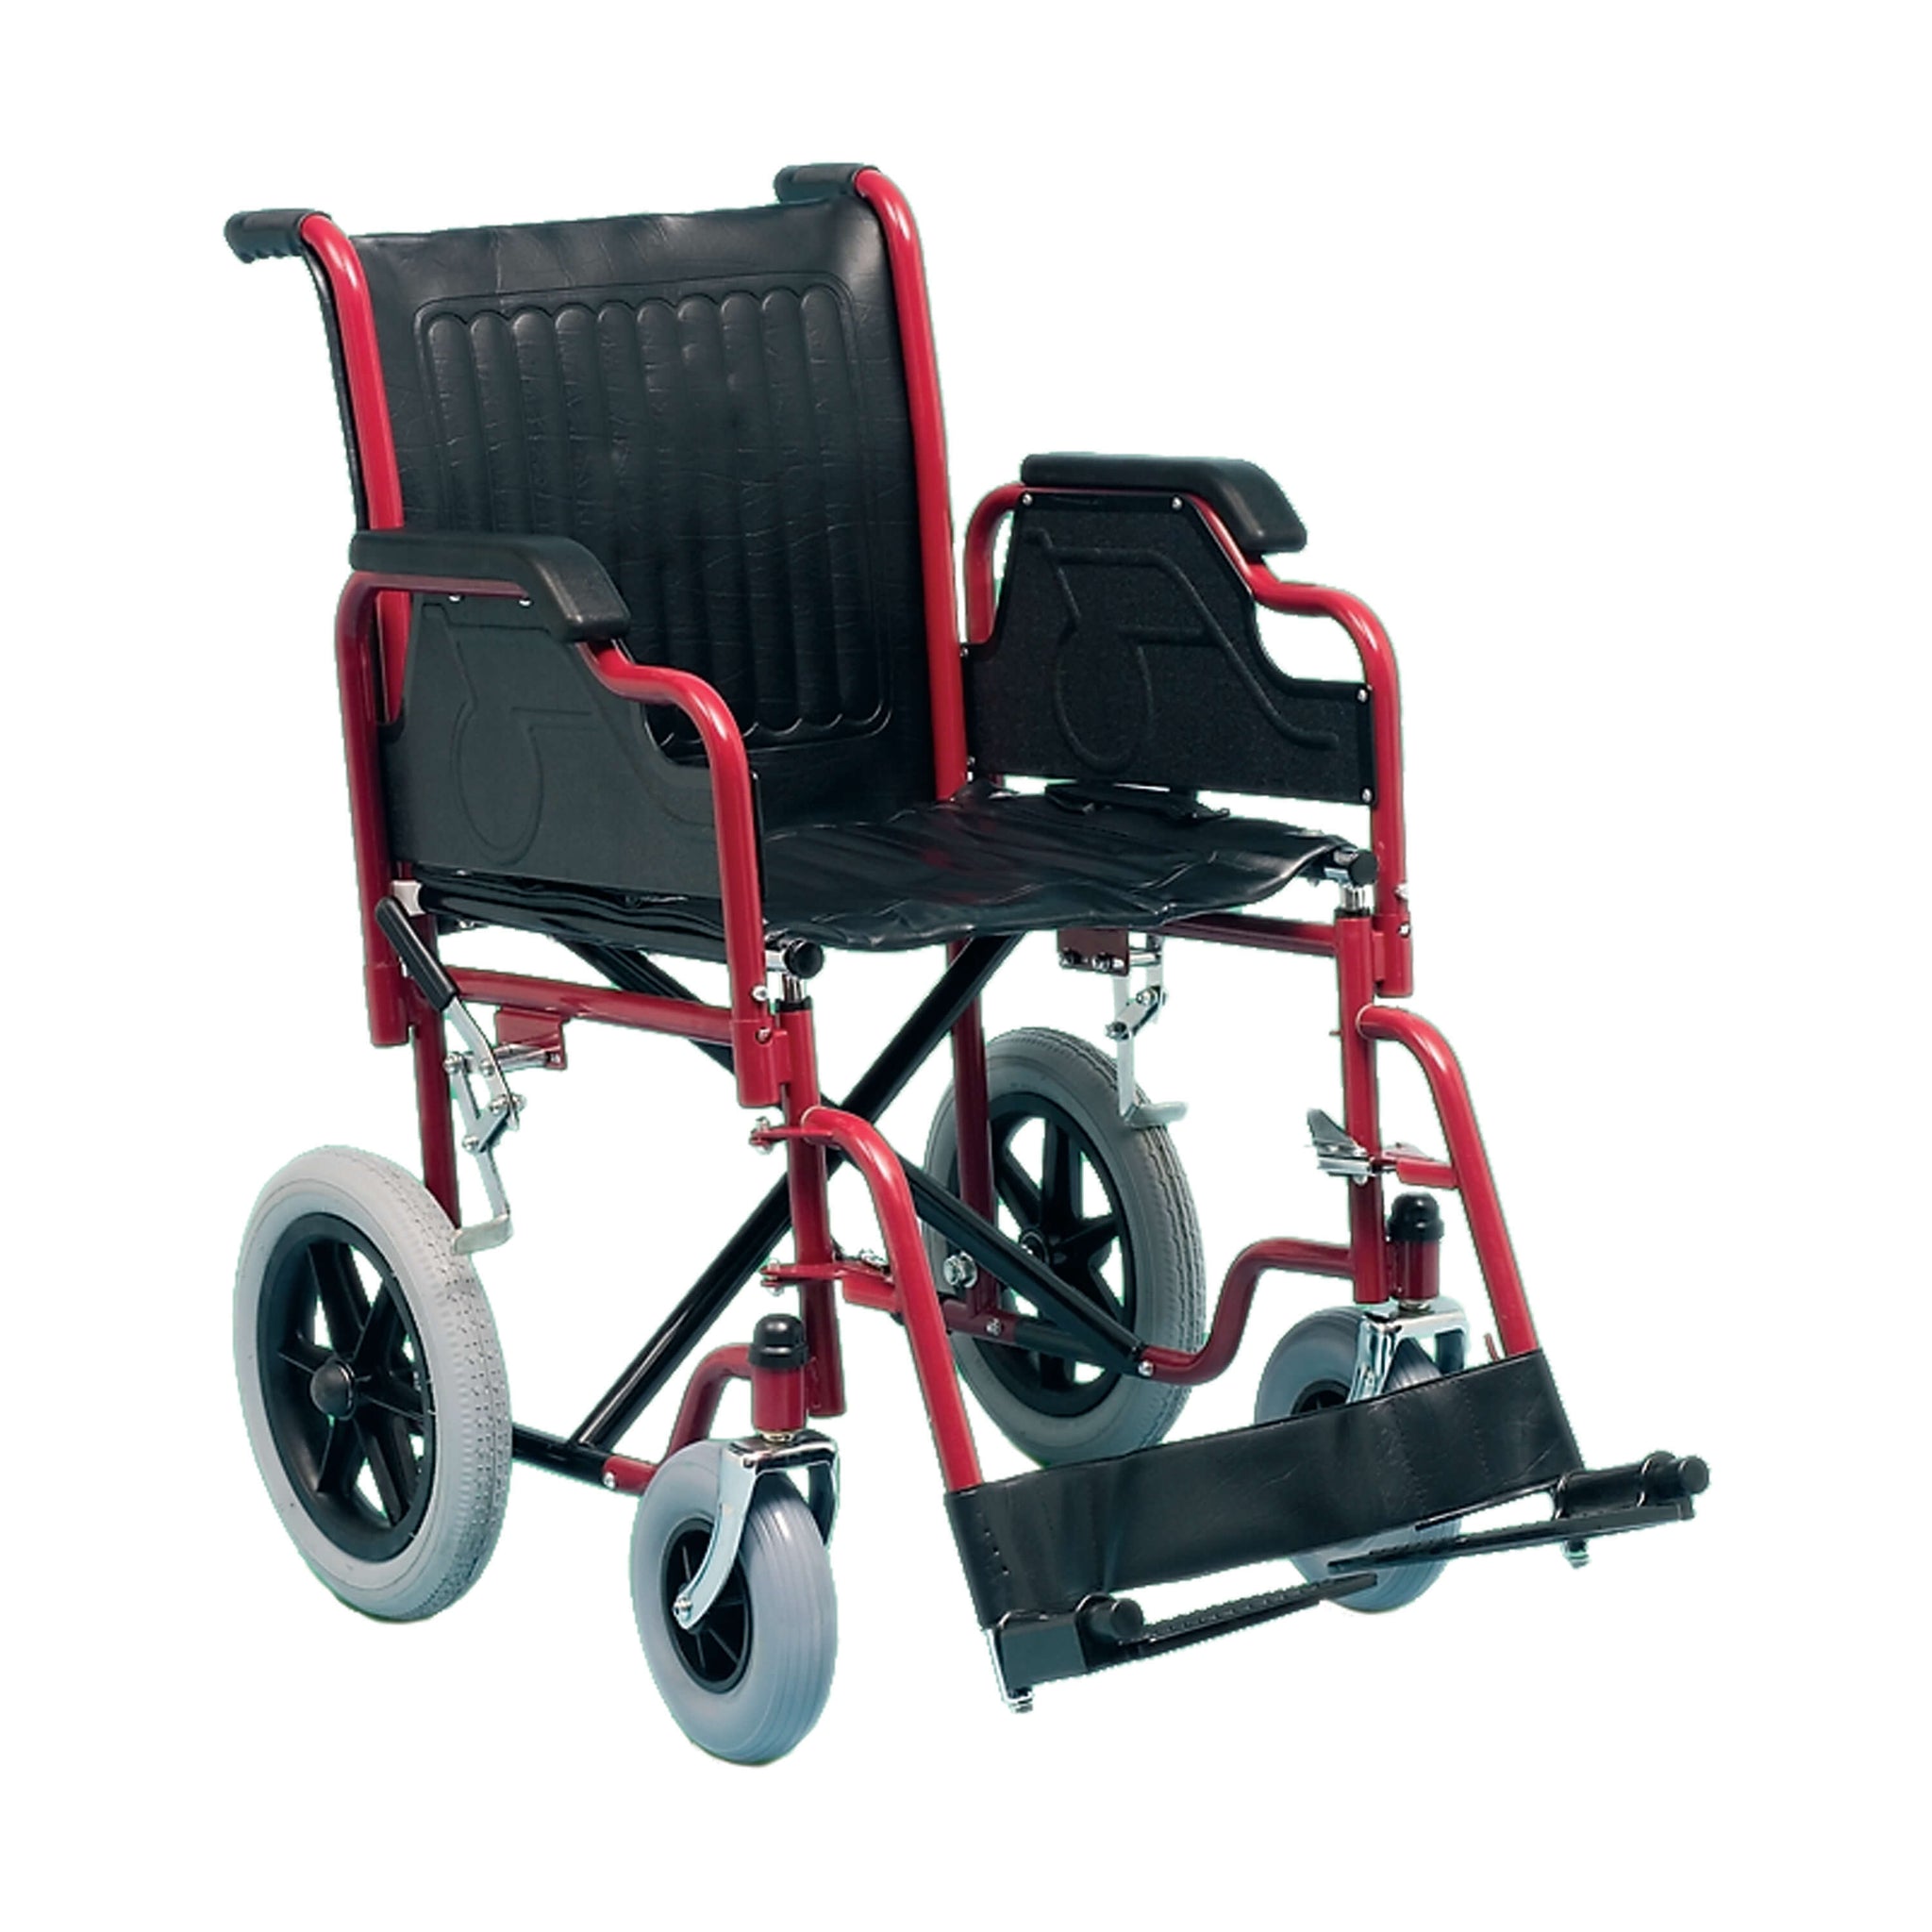 Standard Wheelchair- 46 cm Seat, Transit Up To 100kg